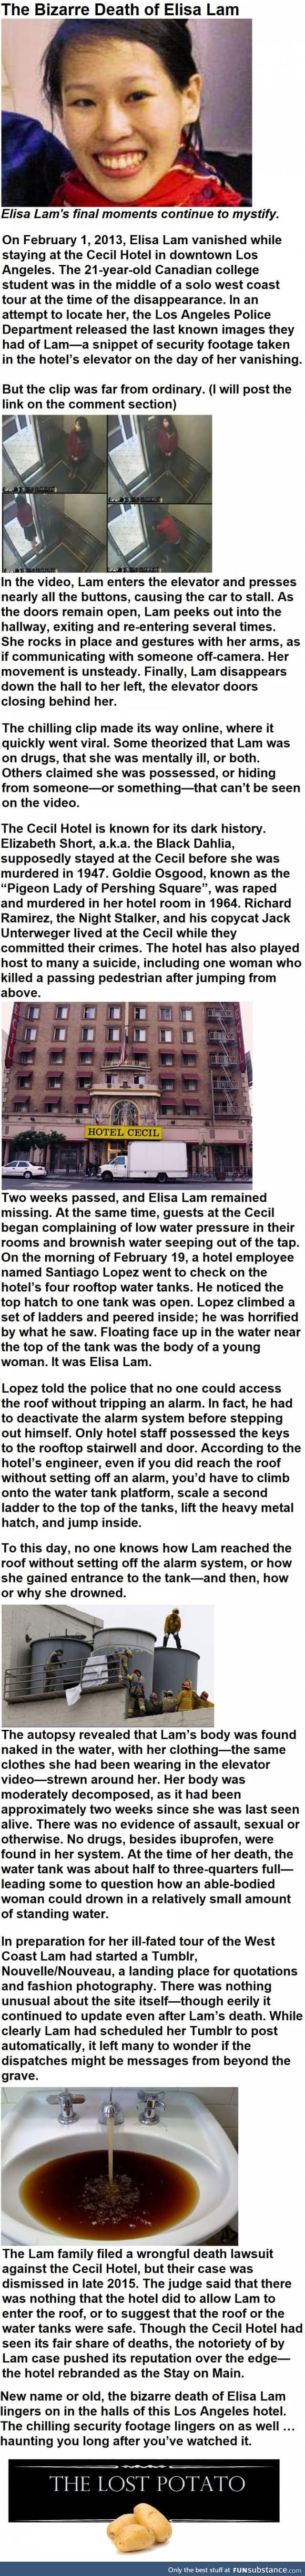 The Bizarre Death of Elisa Lam